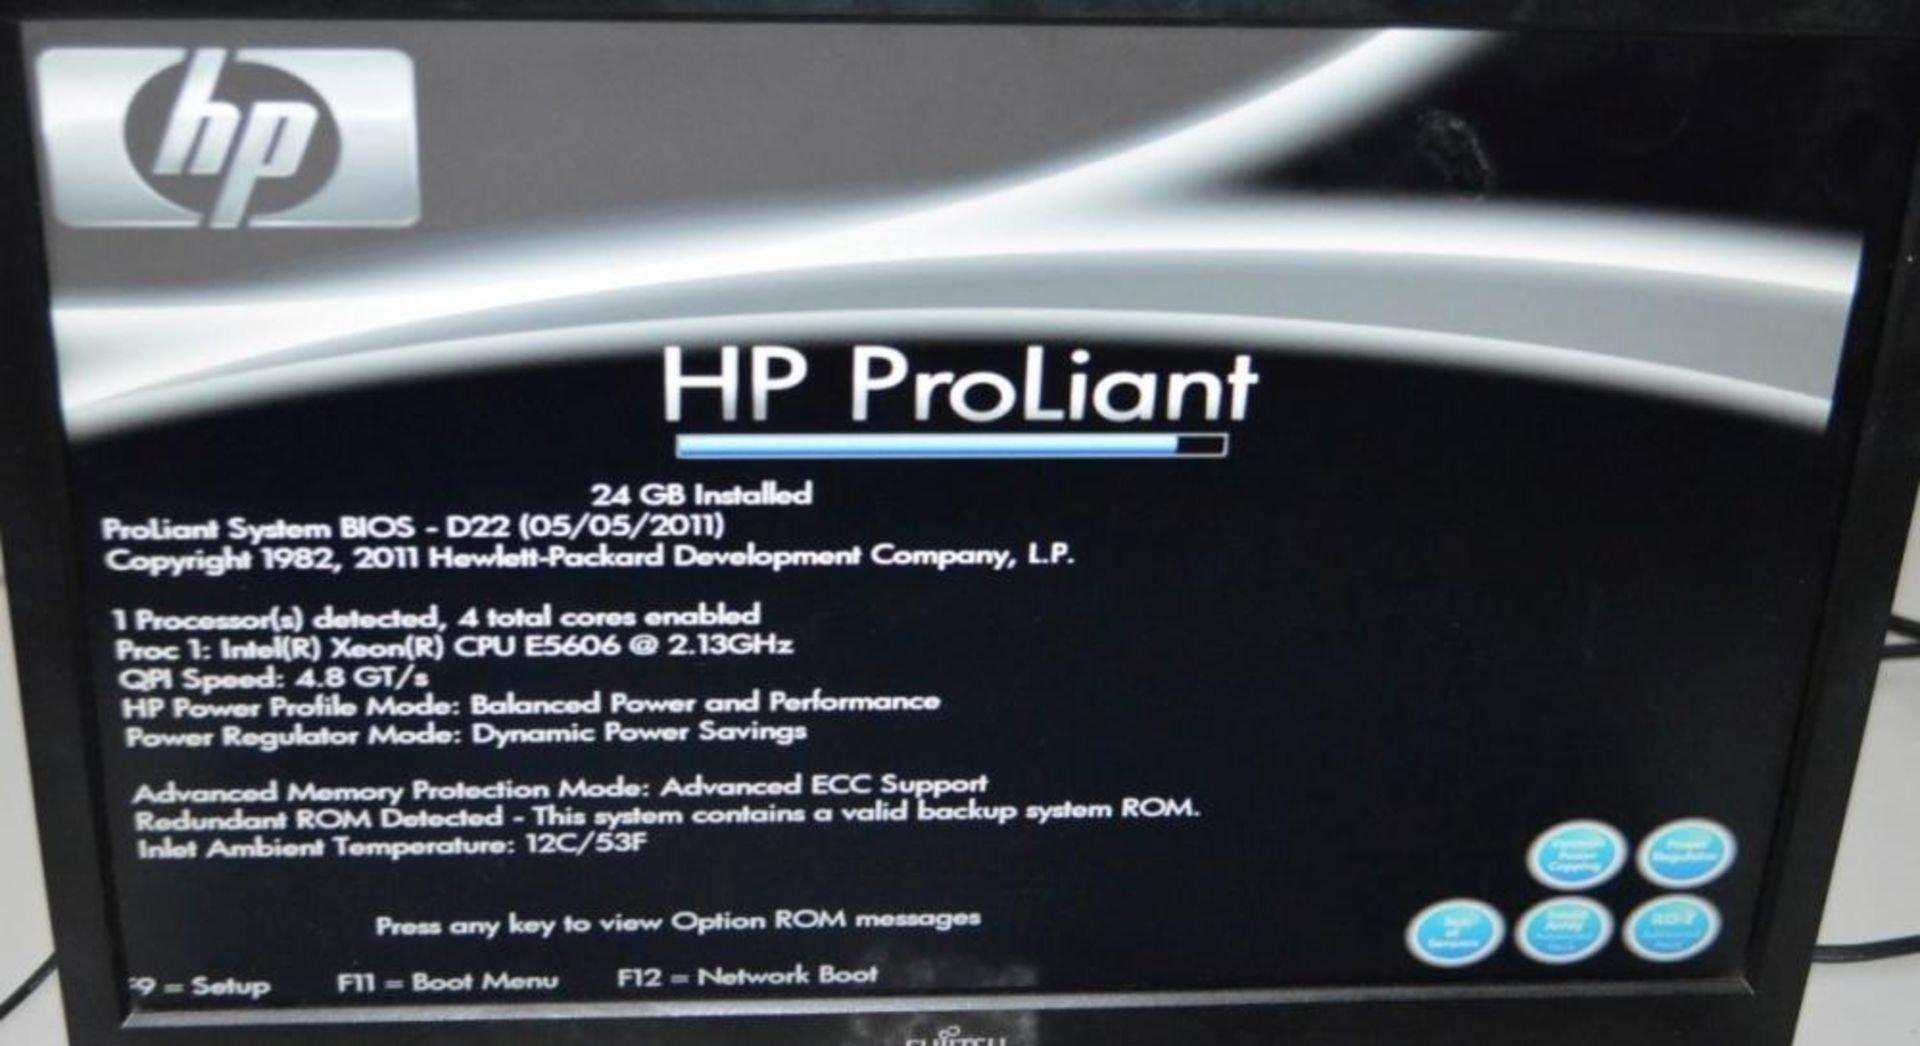 1 x HP Proliant ML350 G6 Server Intel Xeon E5606 2.13GHz 24GB RAM - Ref TP399 - CL394 - Location: Al - Bild 3 aus 4